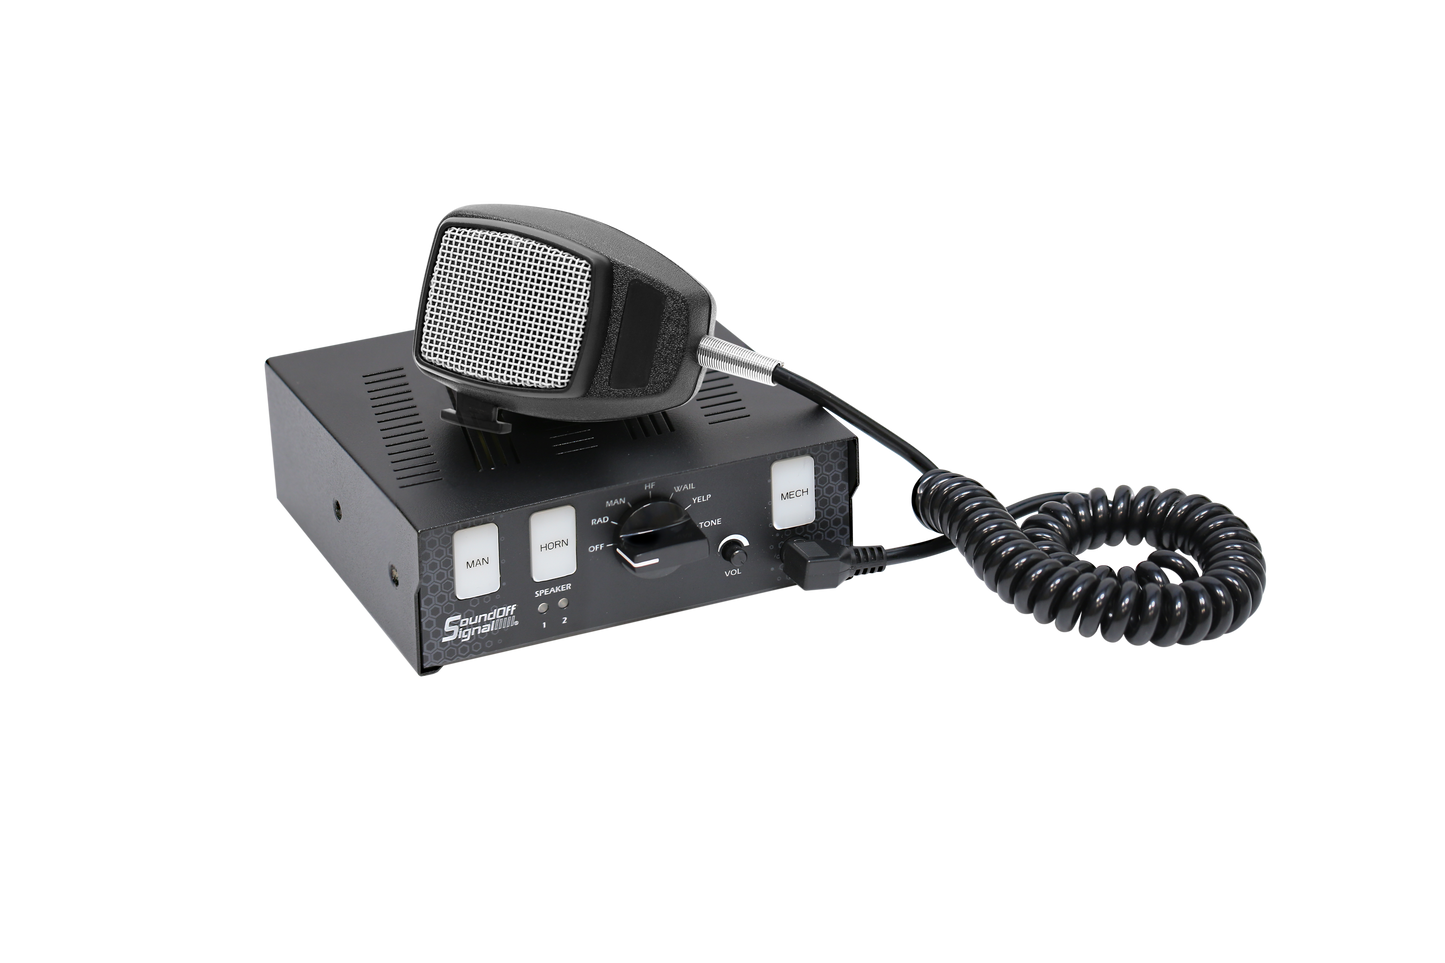 Soundoff Signal ETSAFR100 Fr100 Series Siren W/ Pa Function, 200 Watt Single Tone, Sae J1849, Ca Title 13 & Ece R10